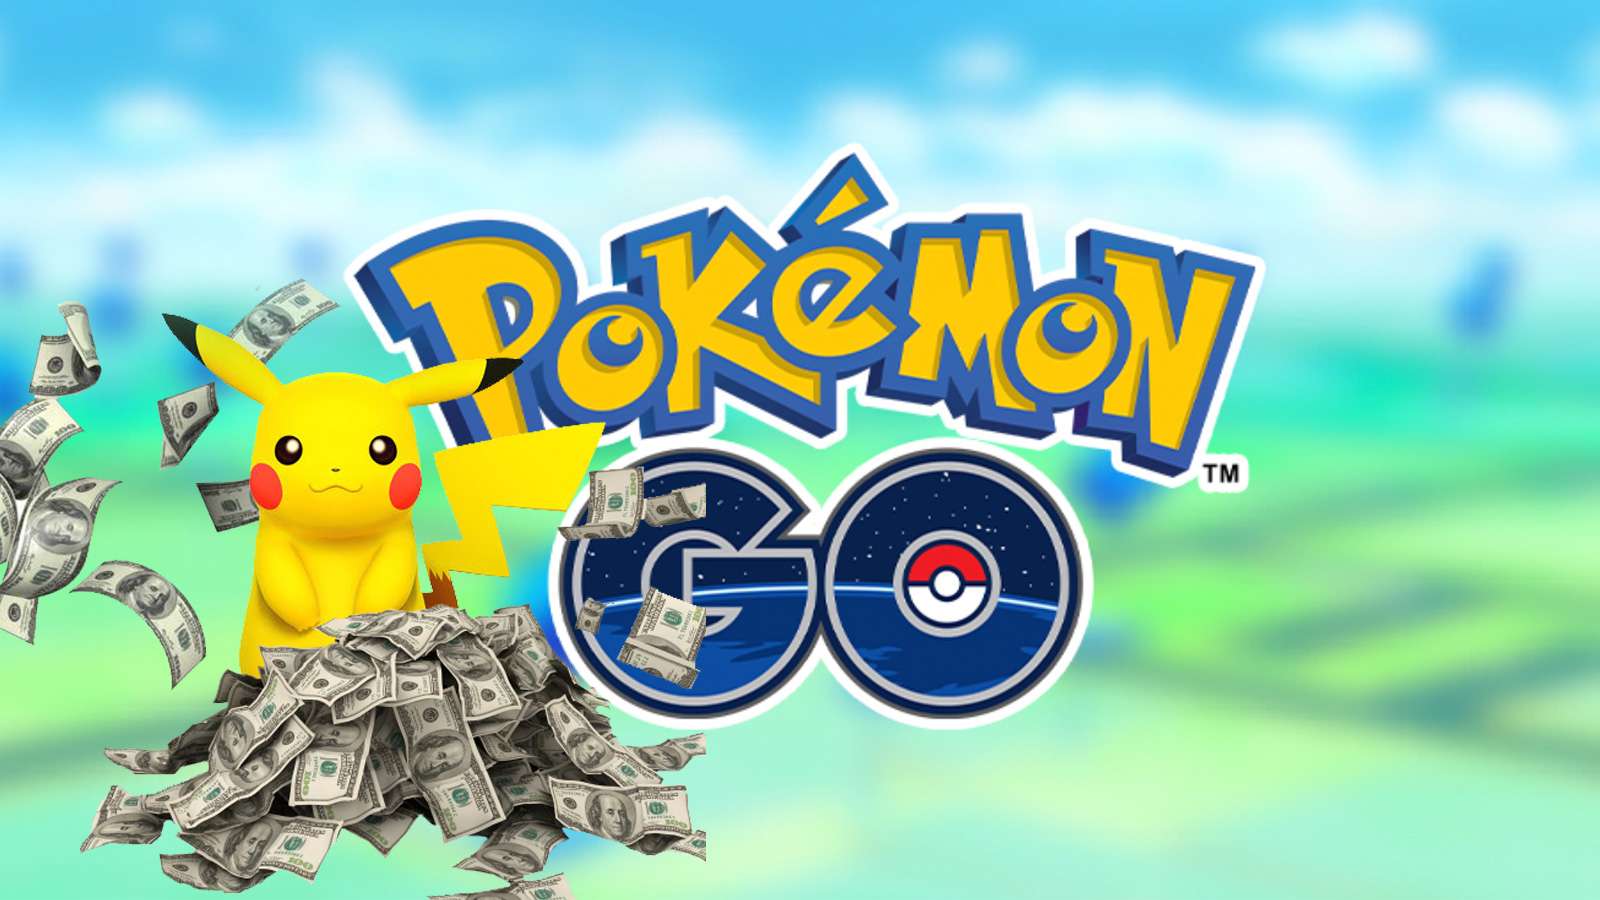 Screenshot of Pikachu with money pile over Pokemon Go logo.